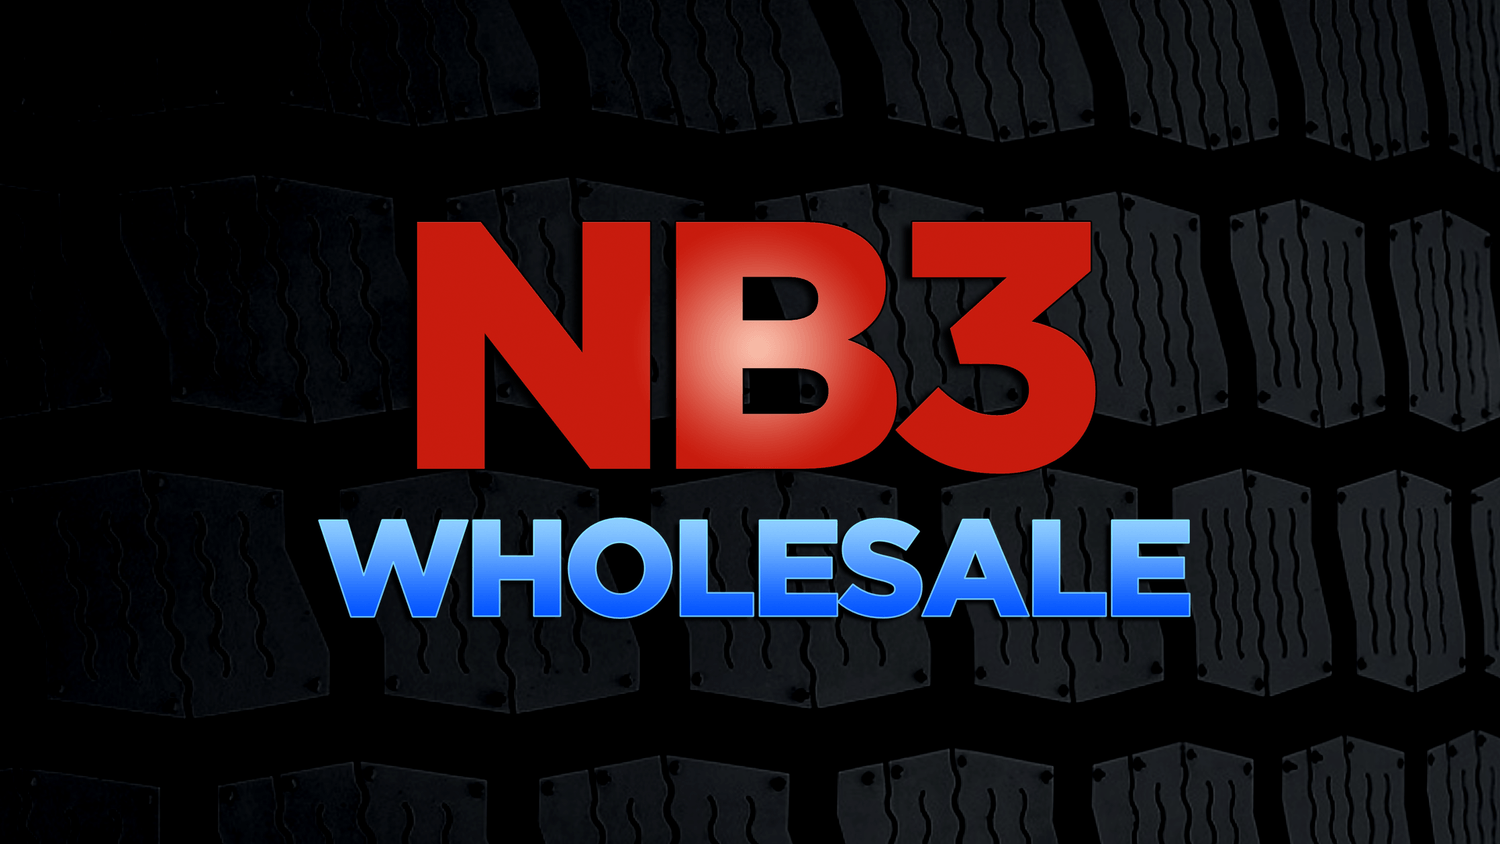 NB3 Logo - NB3 WHOLESALE